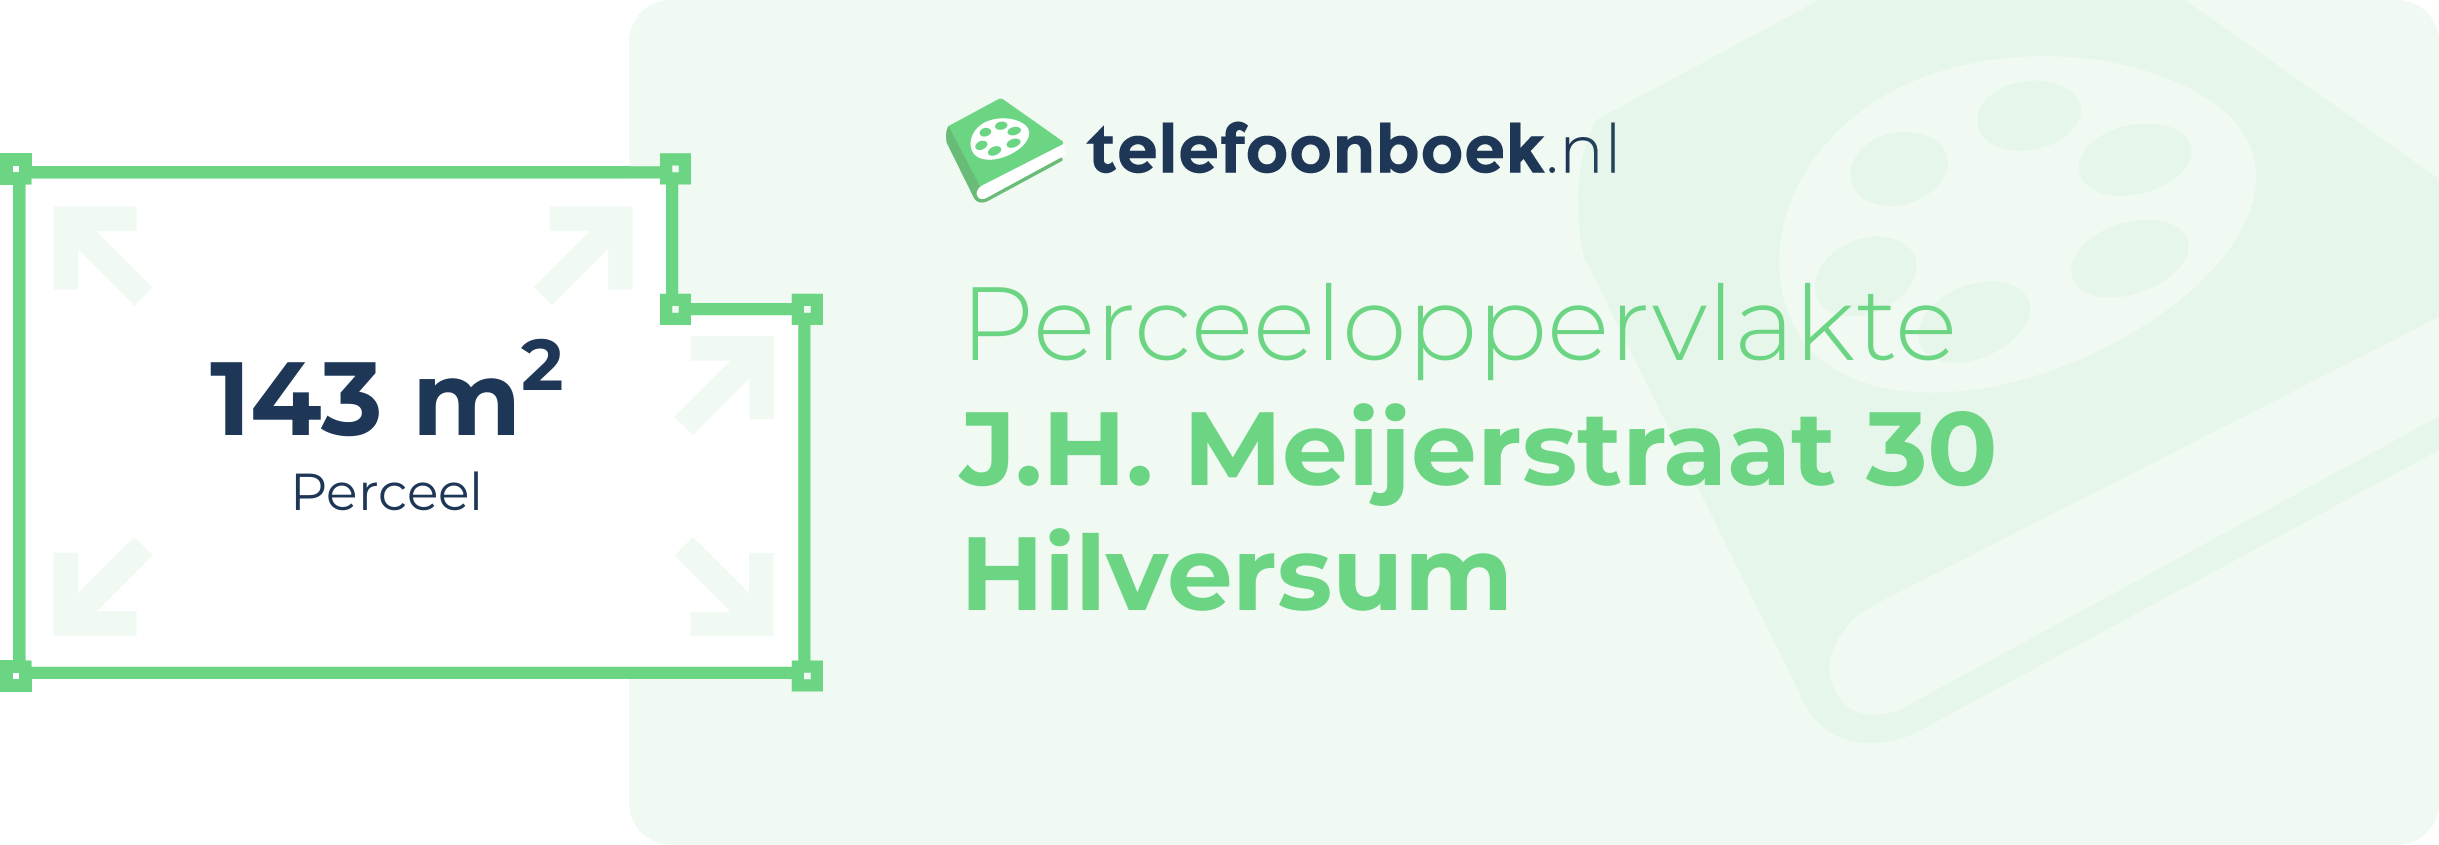 Perceeloppervlakte J.H. Meijerstraat 30 Hilversum